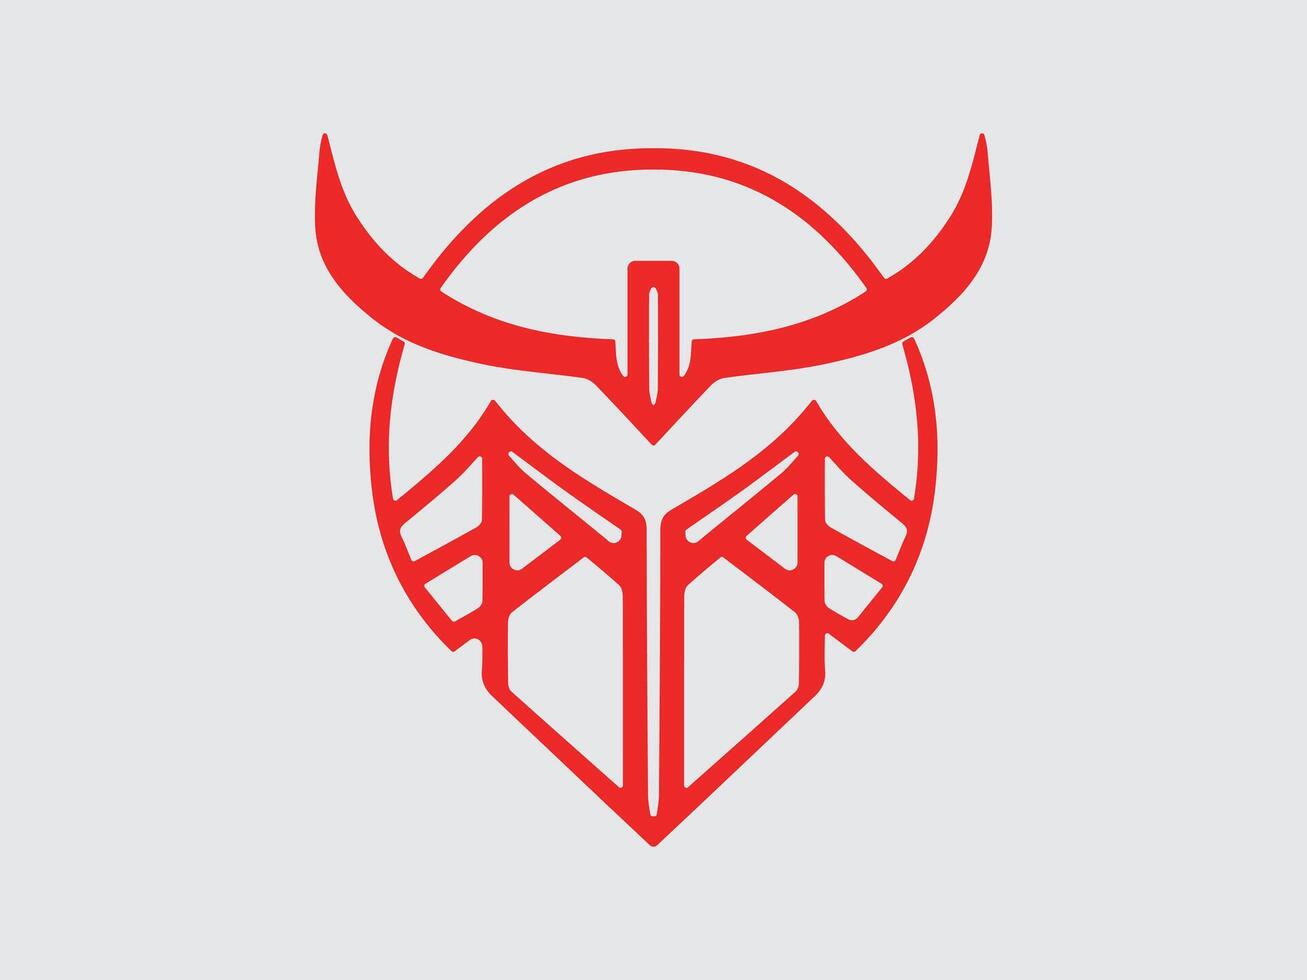 Viking logo design icon symbol vector illustration.